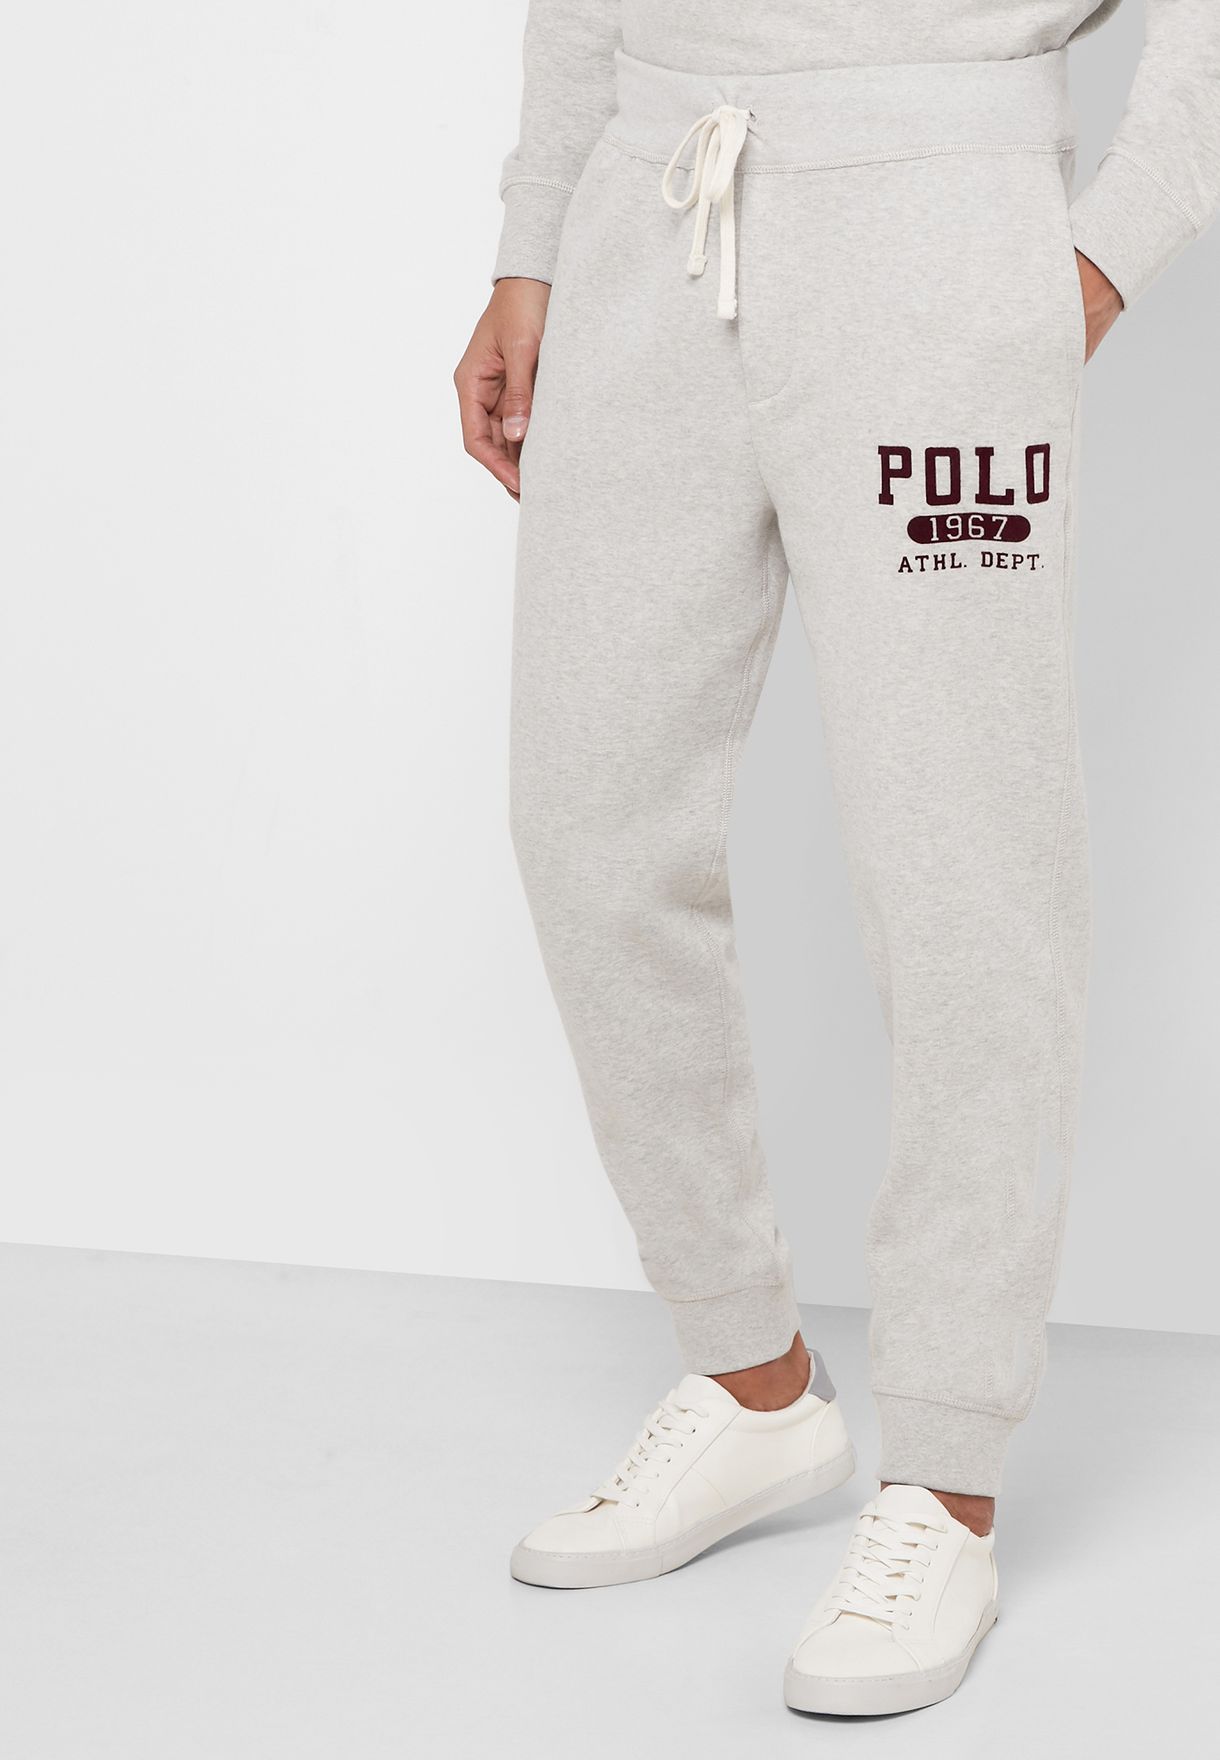 polo ralph lauren gray sweatpants